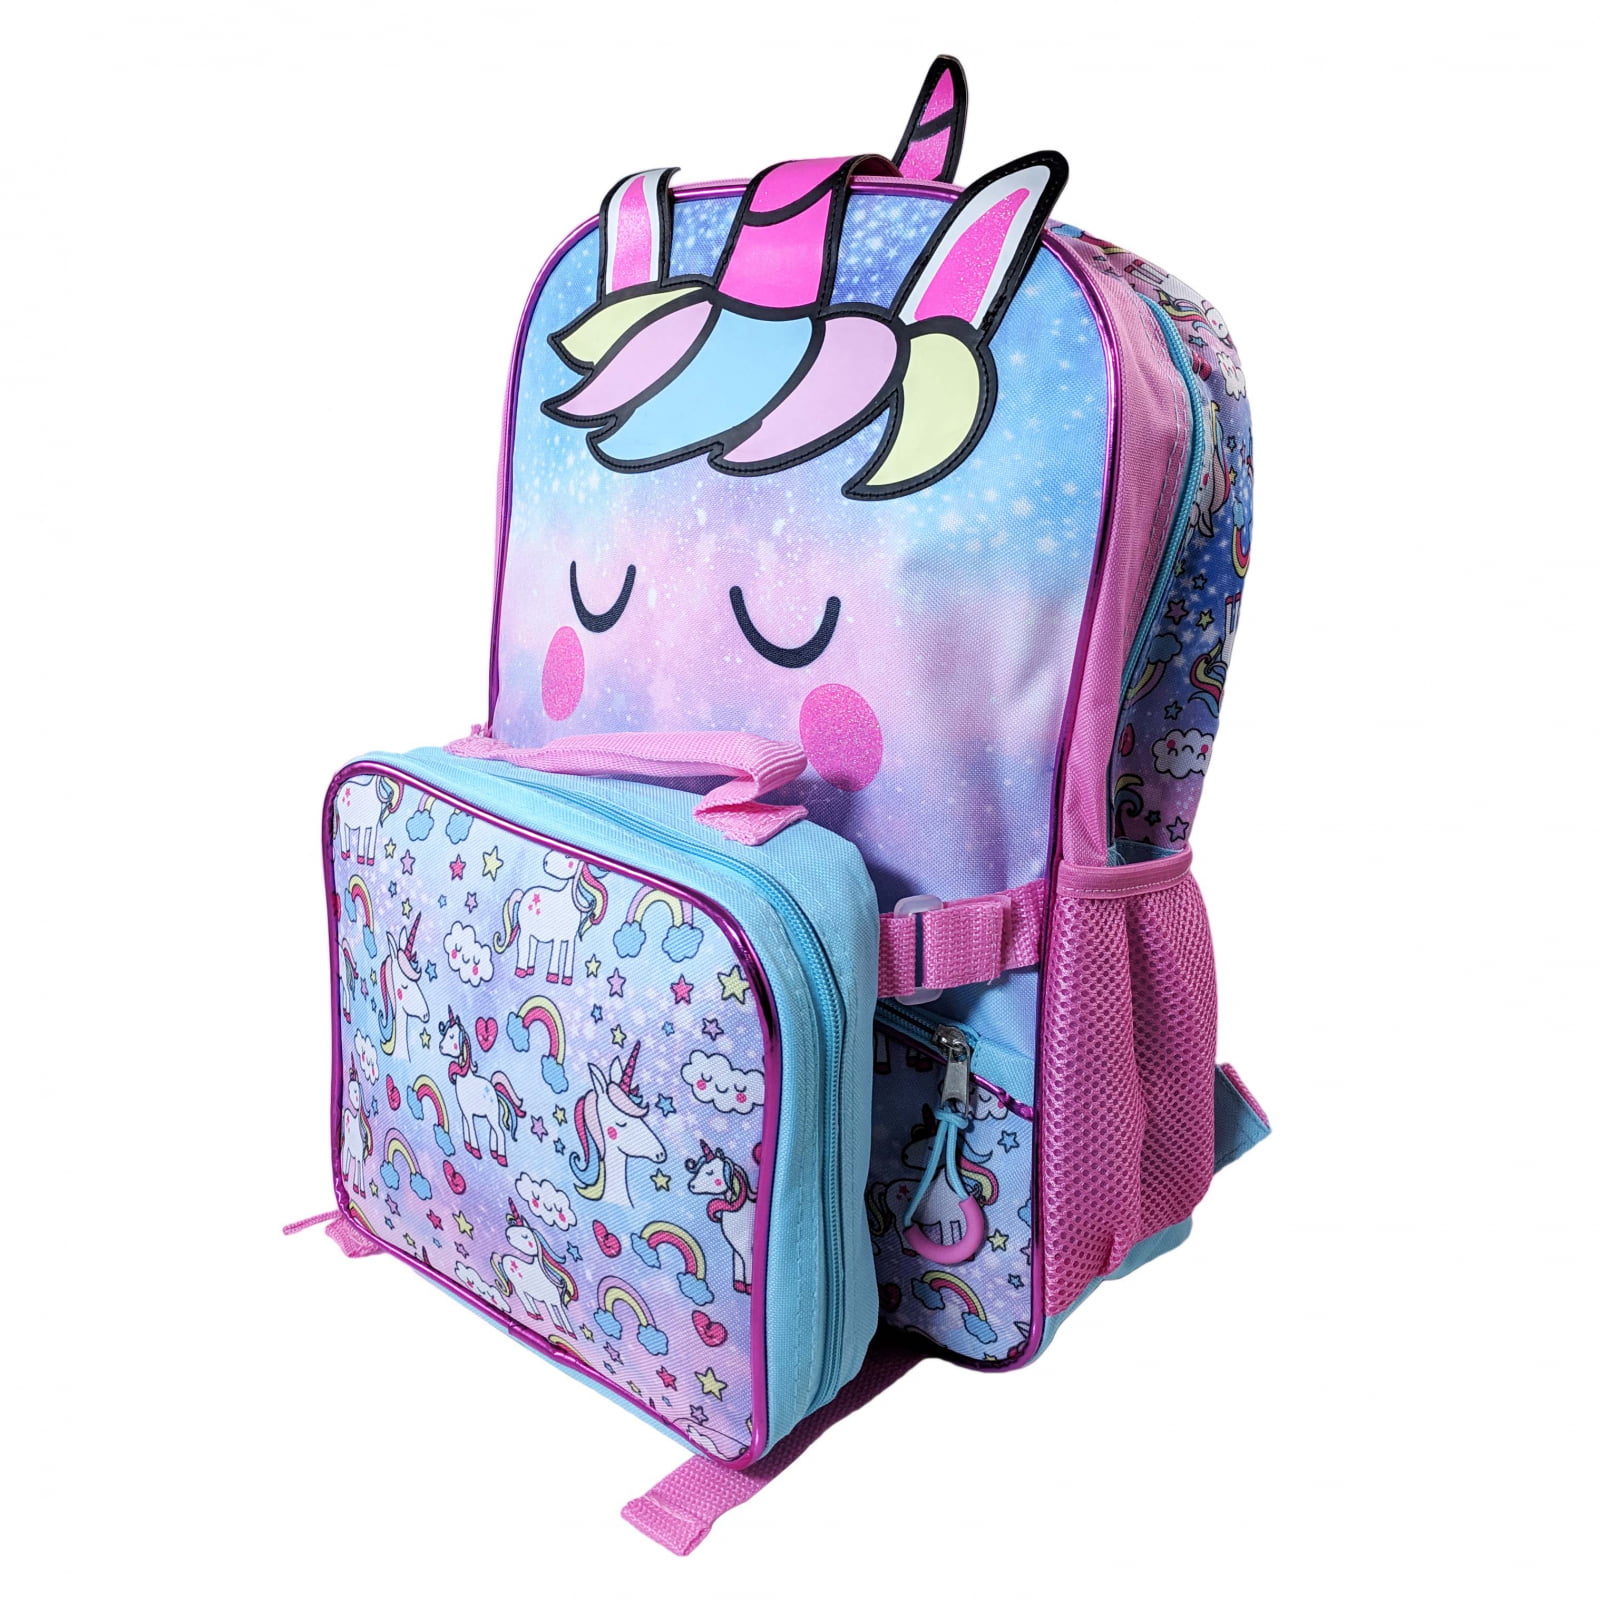 Keeli Kids Girls Lunch Box Backpack School Book Bag Set in Unicorn Pink 